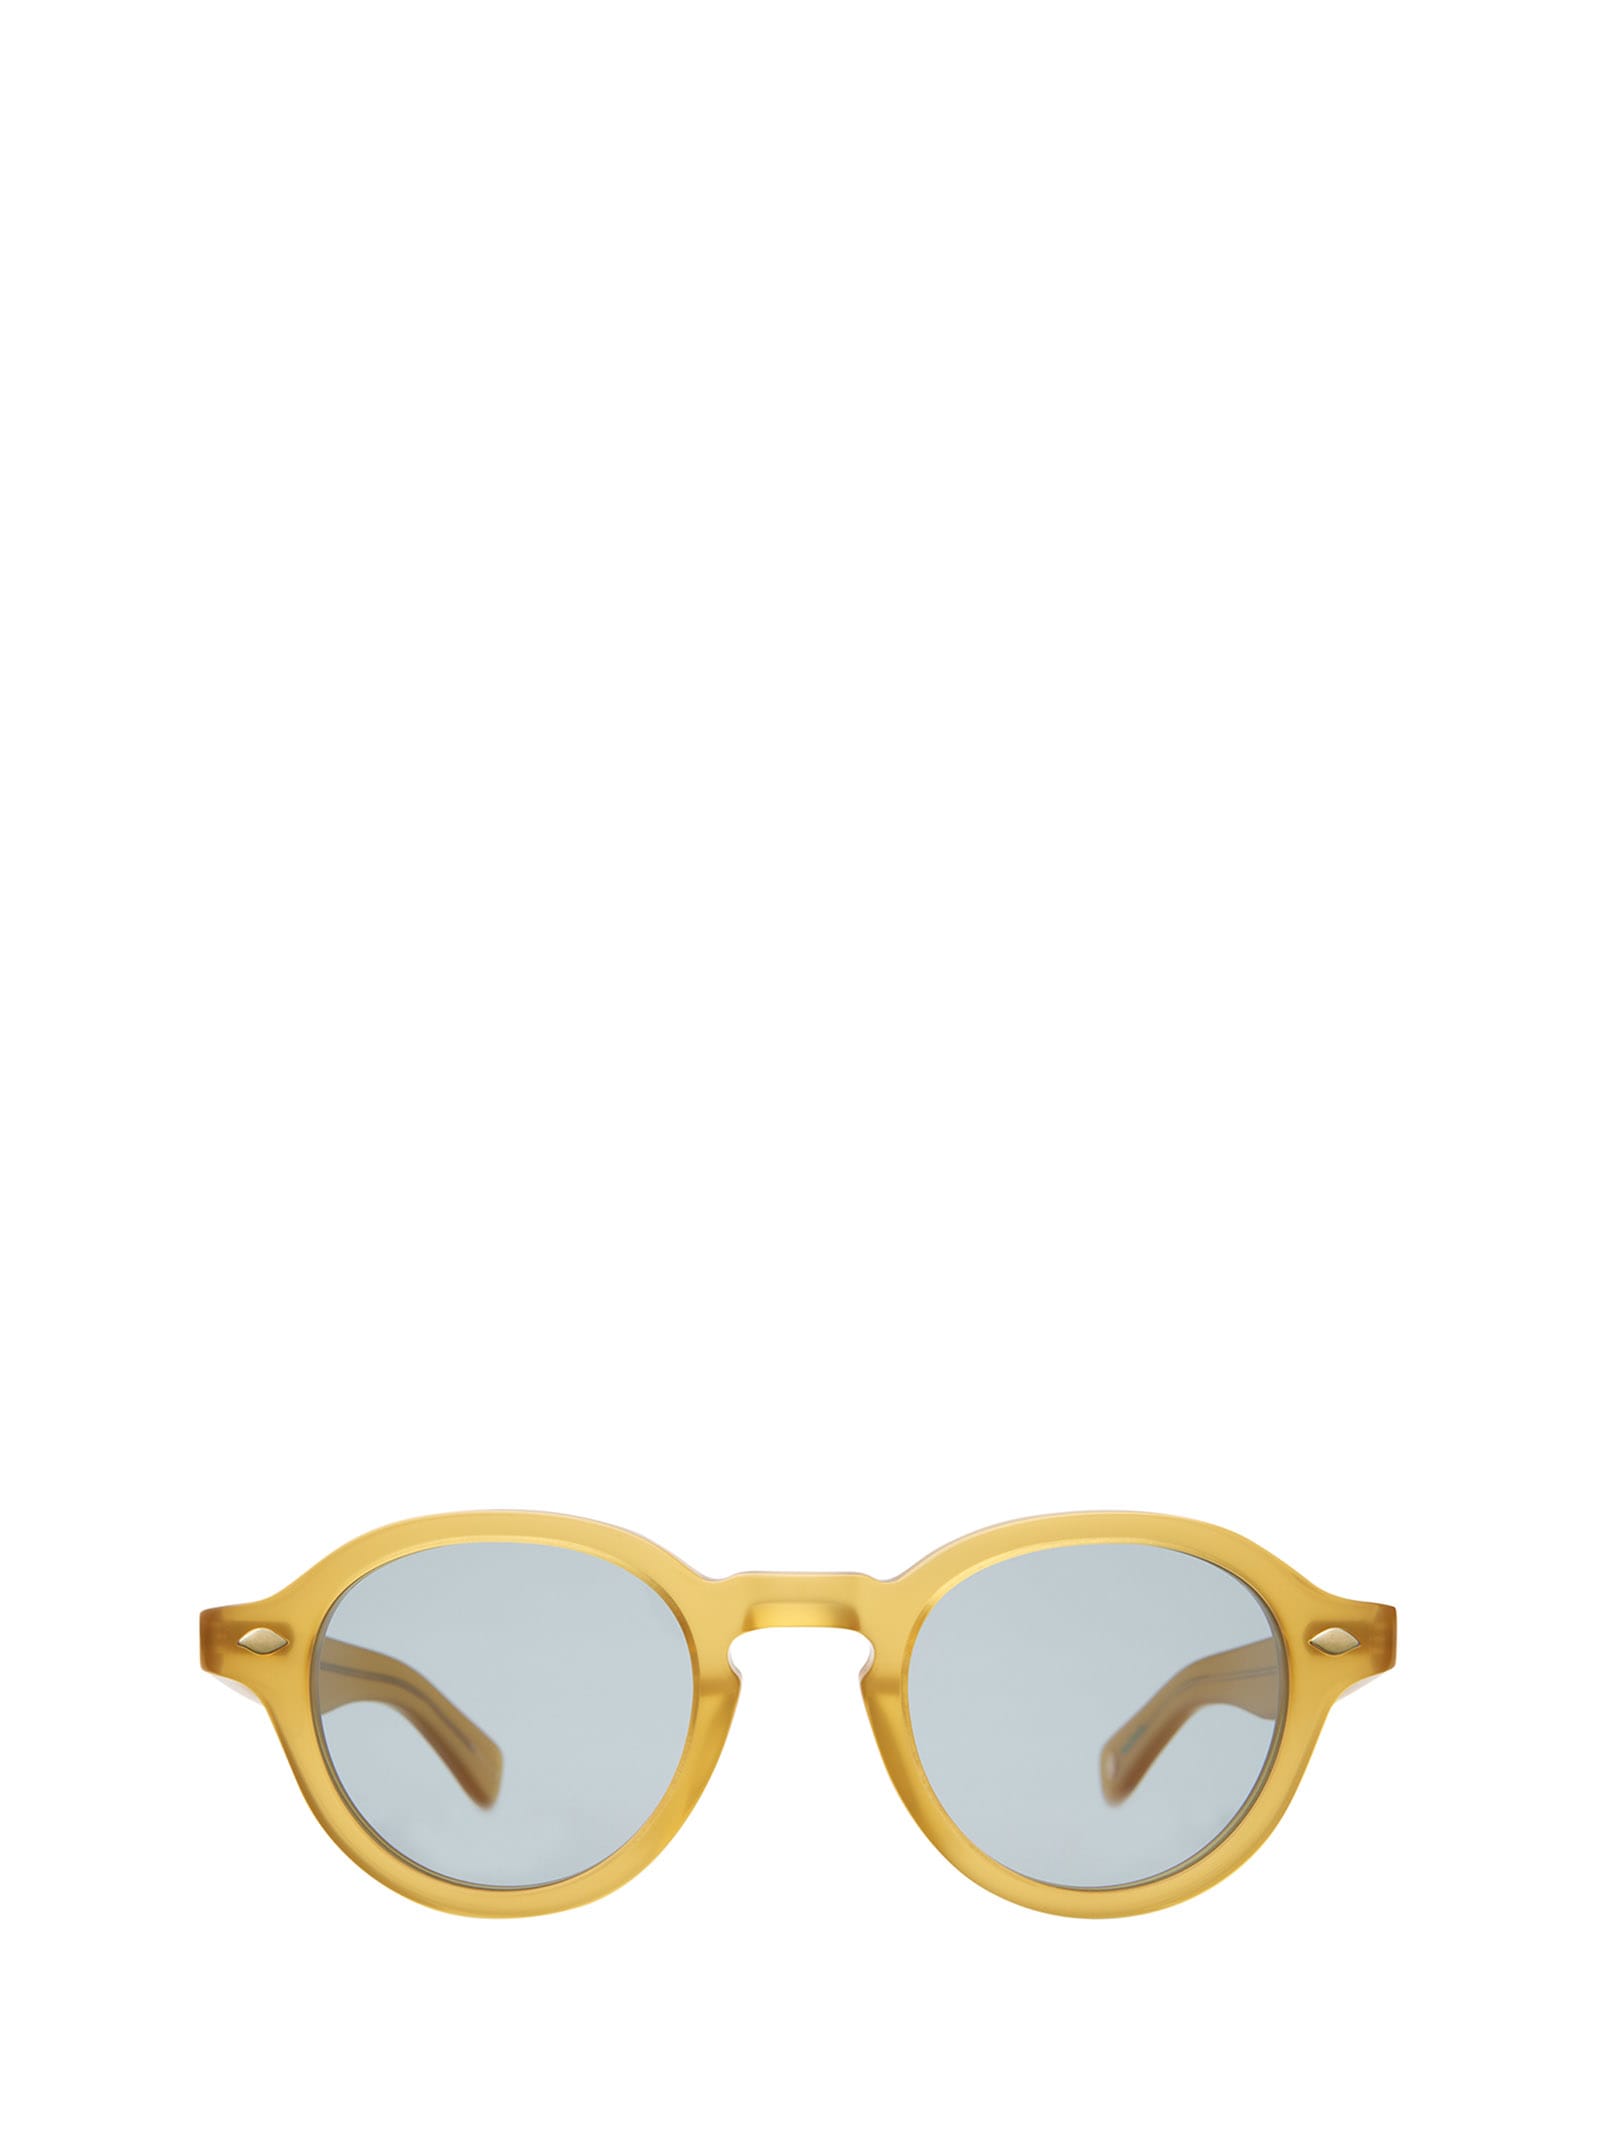 Flipper Sun Blondie Sunglasses